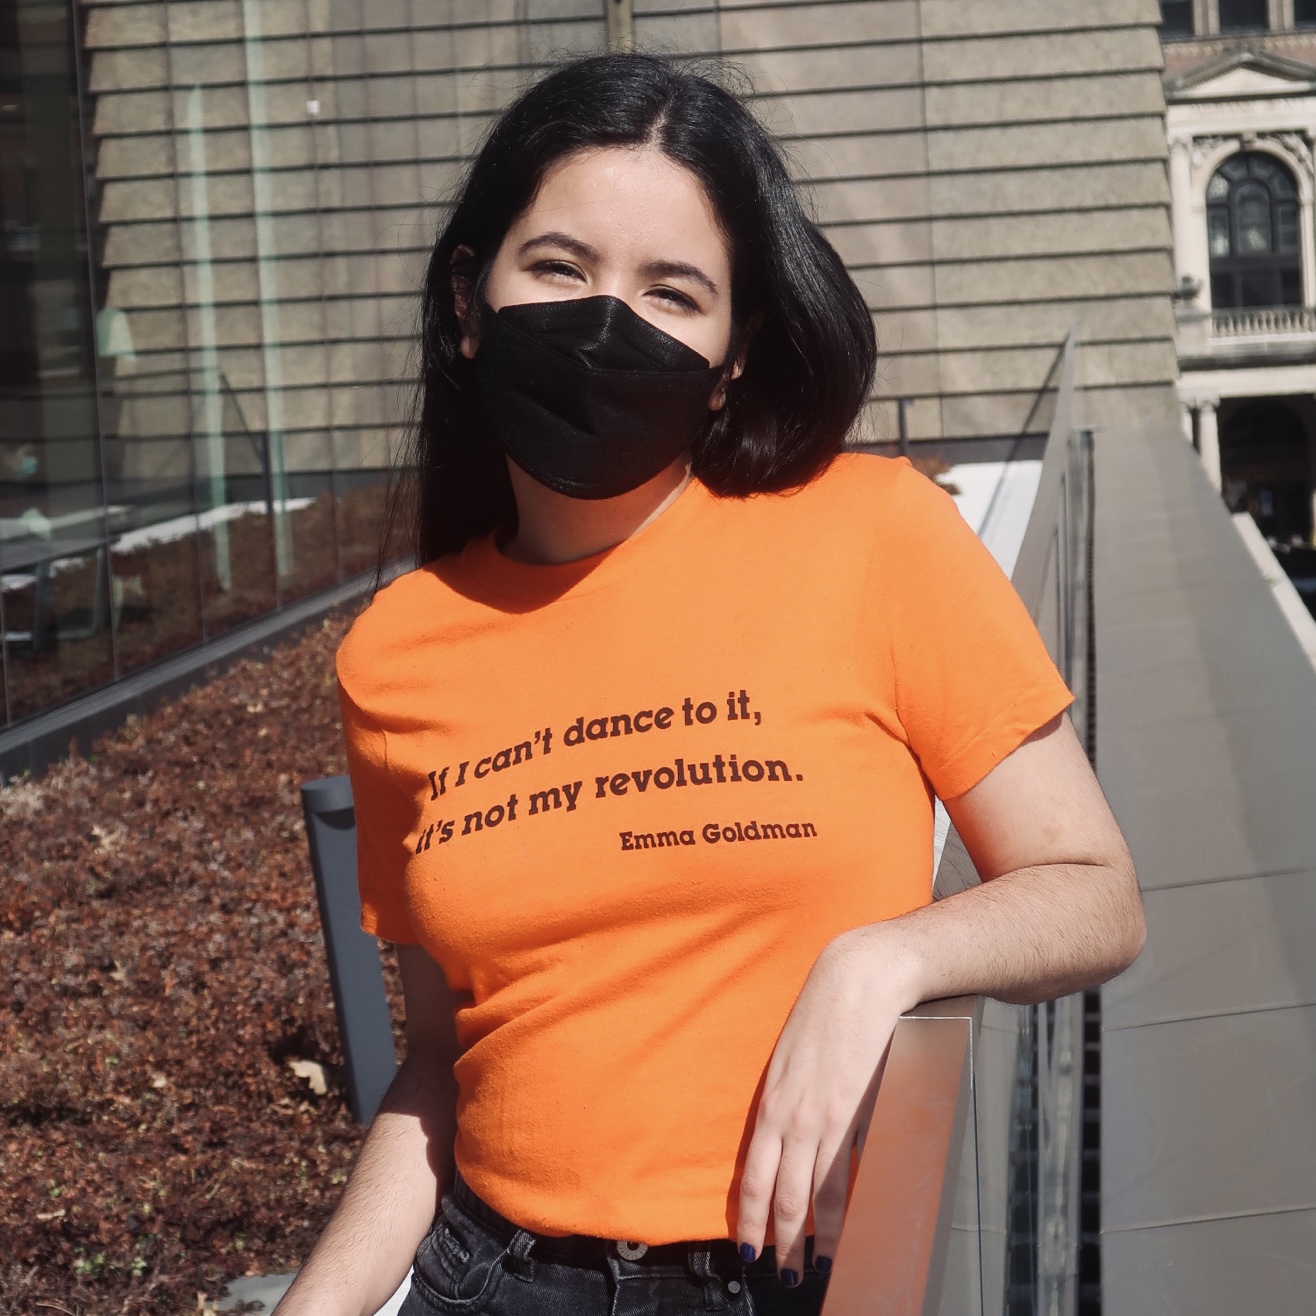 Stident wearing orange shirt with Emma Goldman quote